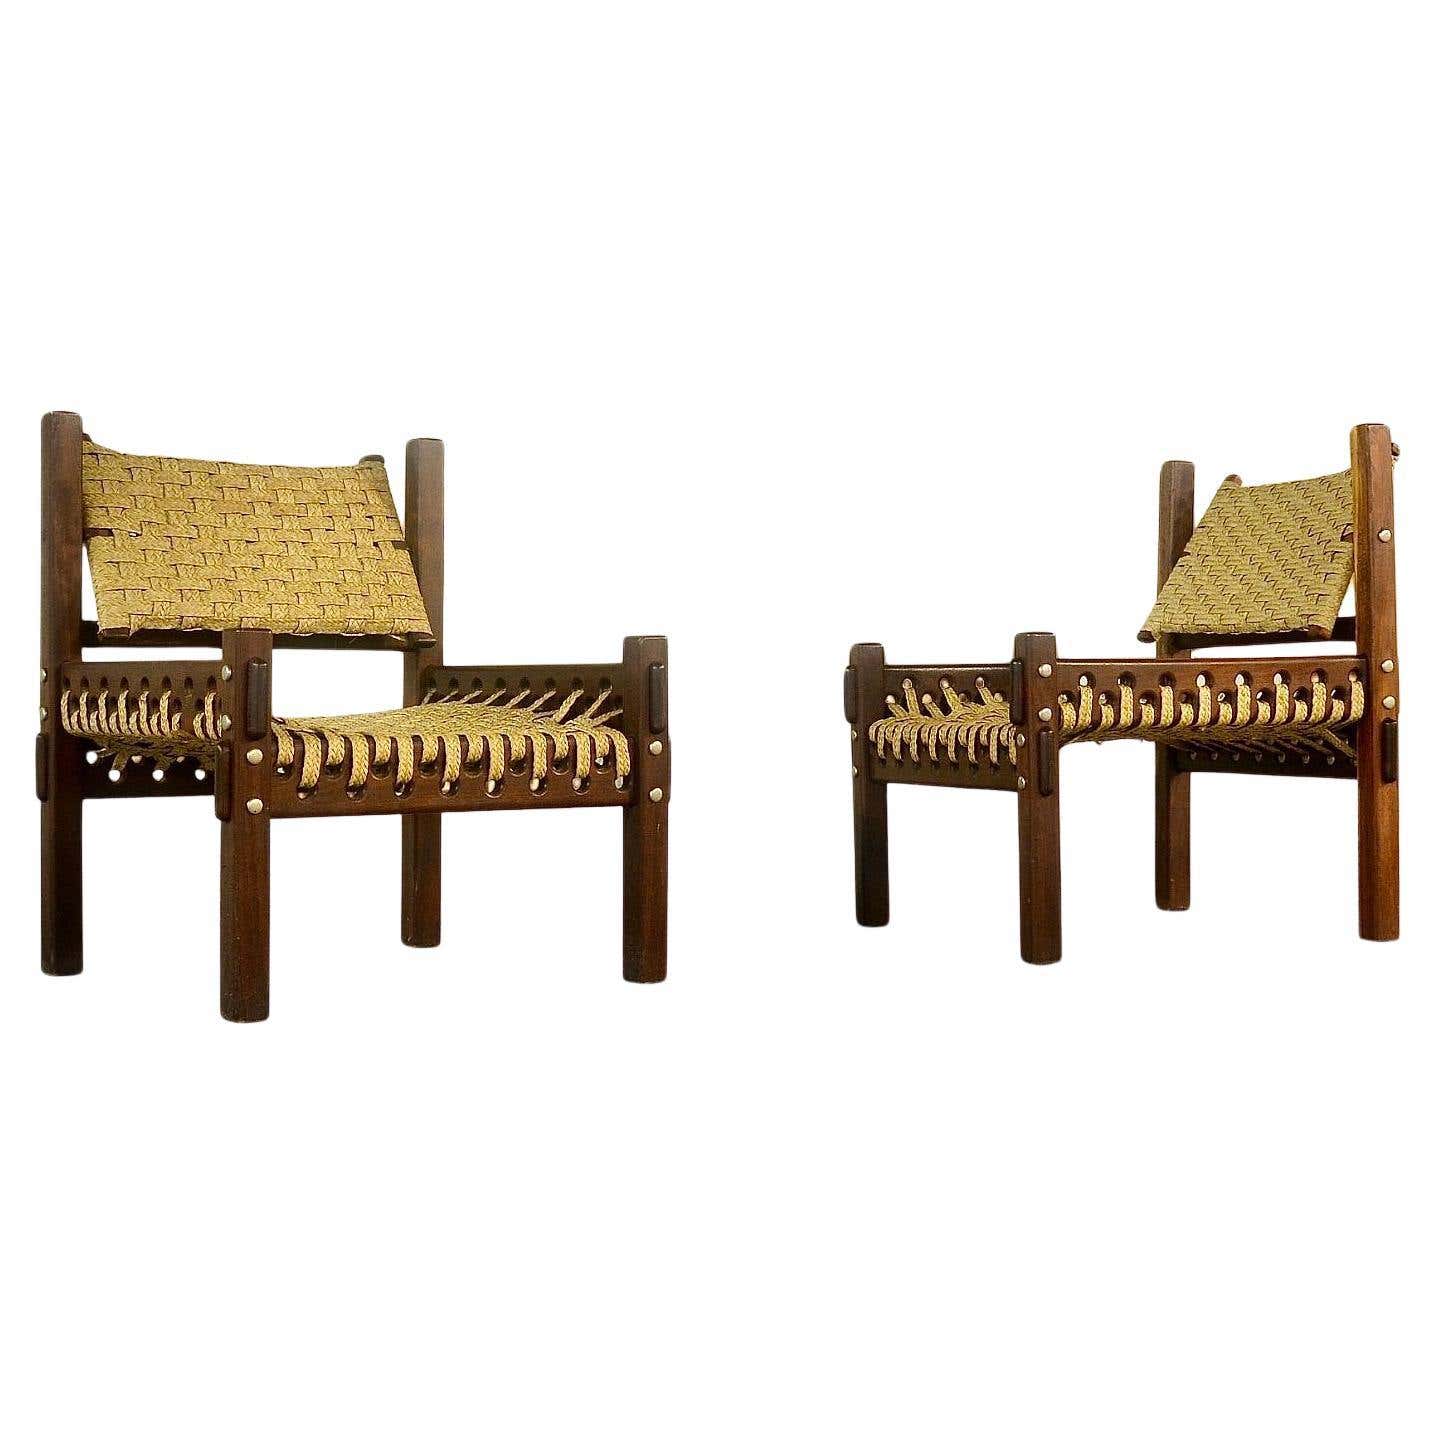 Mahogany and woven palm fiber armchairs, 1960s